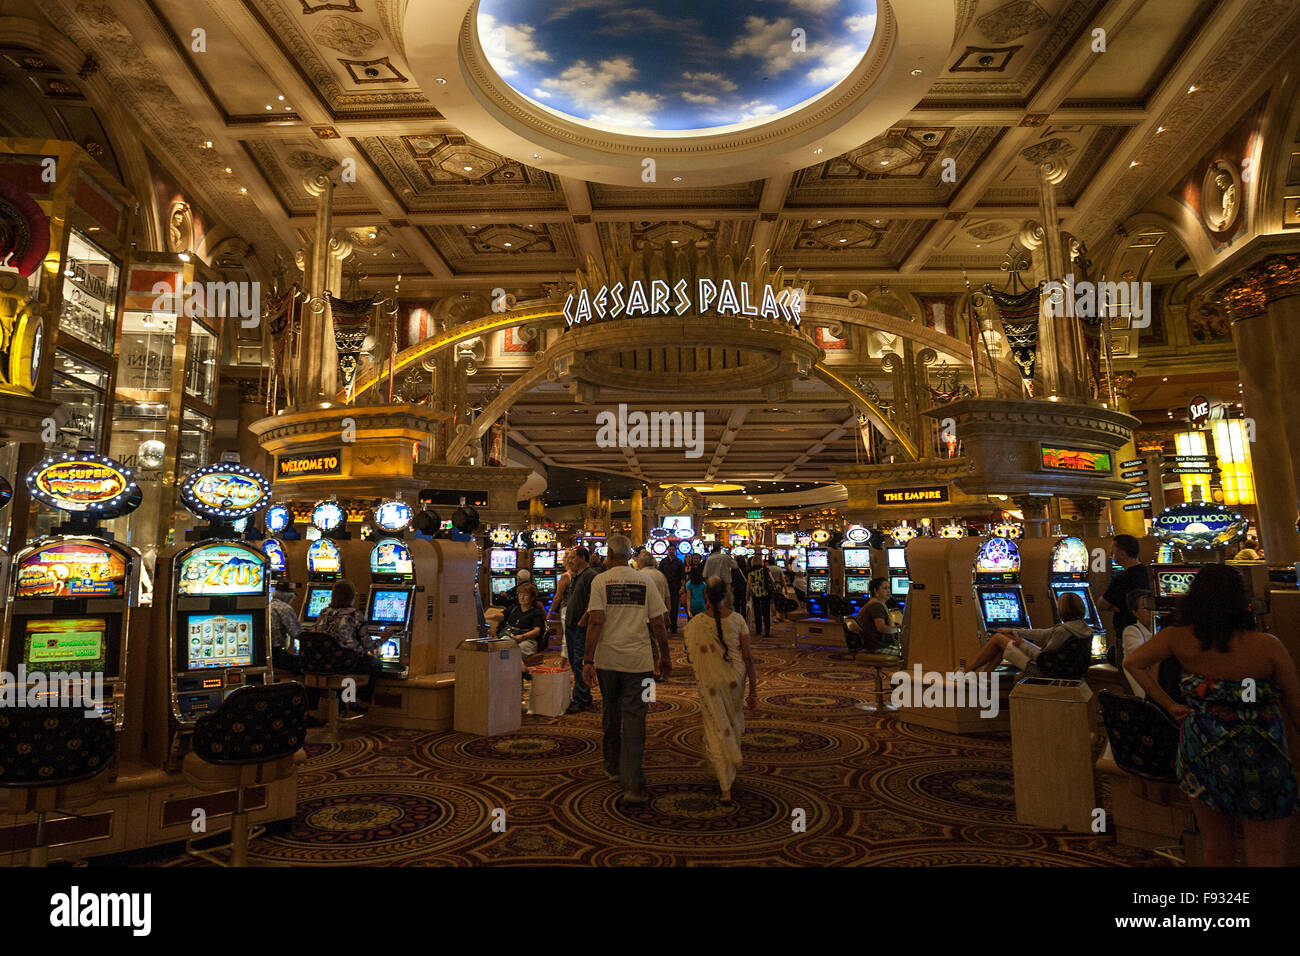 betplay casino online